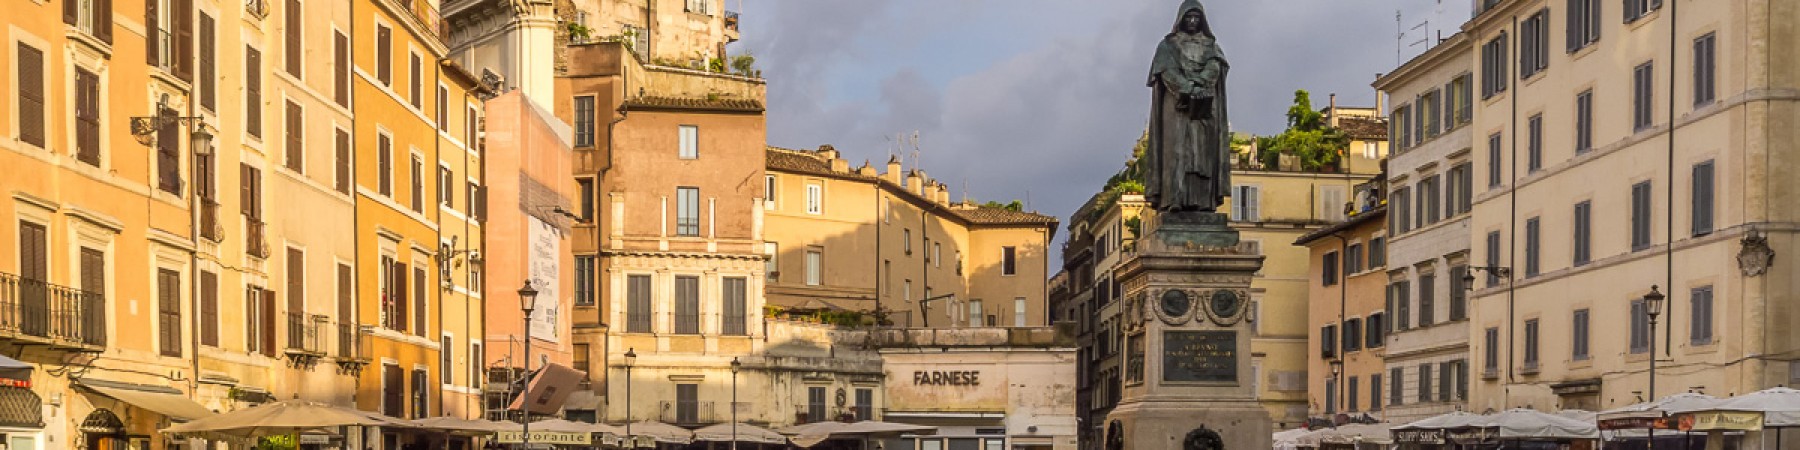 Schools Guided Tour- The Renaissance of Rome